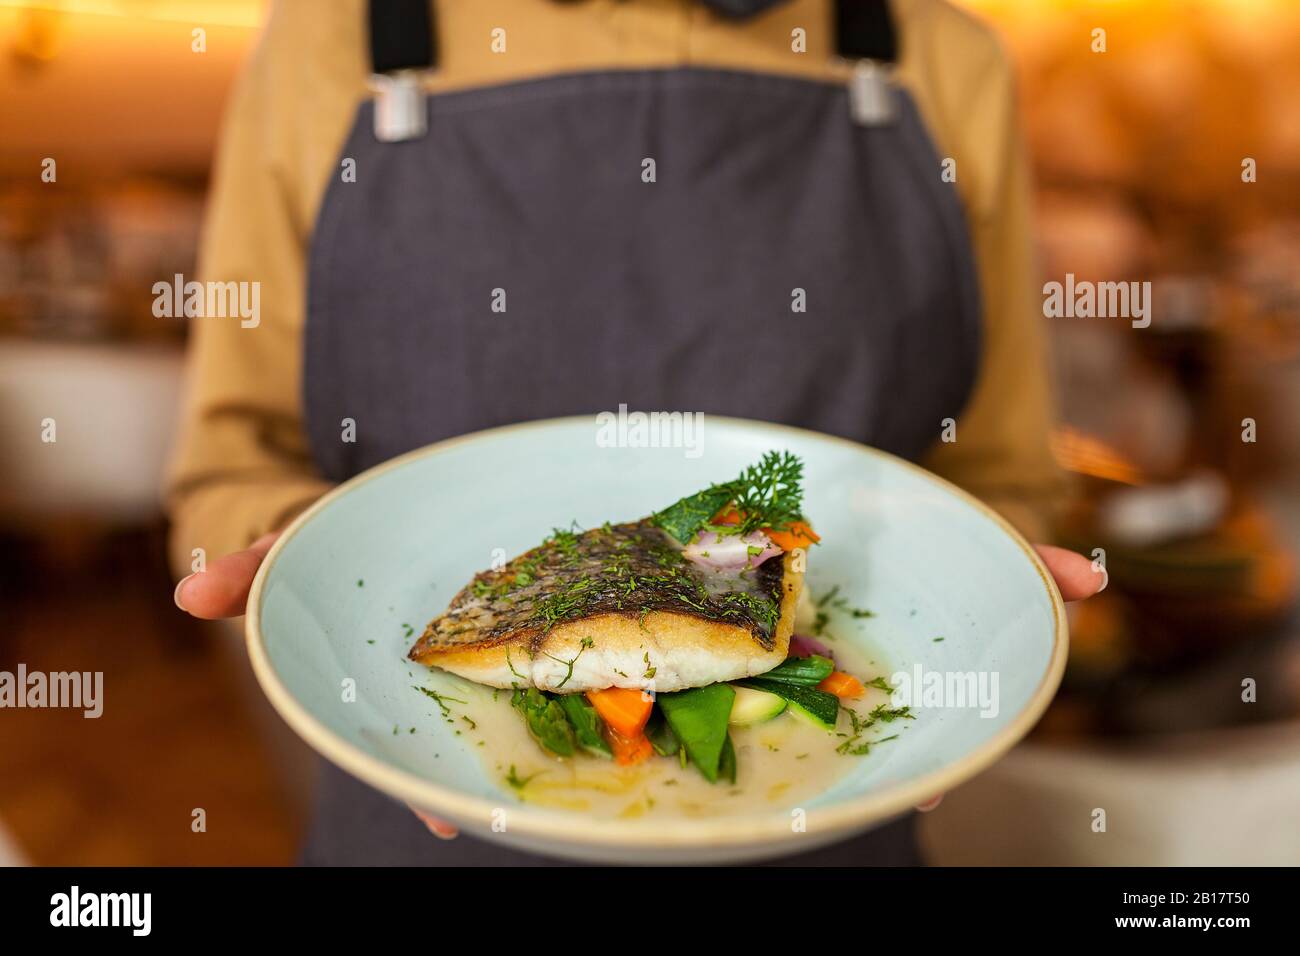 Waitress serving healthy fish and veggies Stock Photo